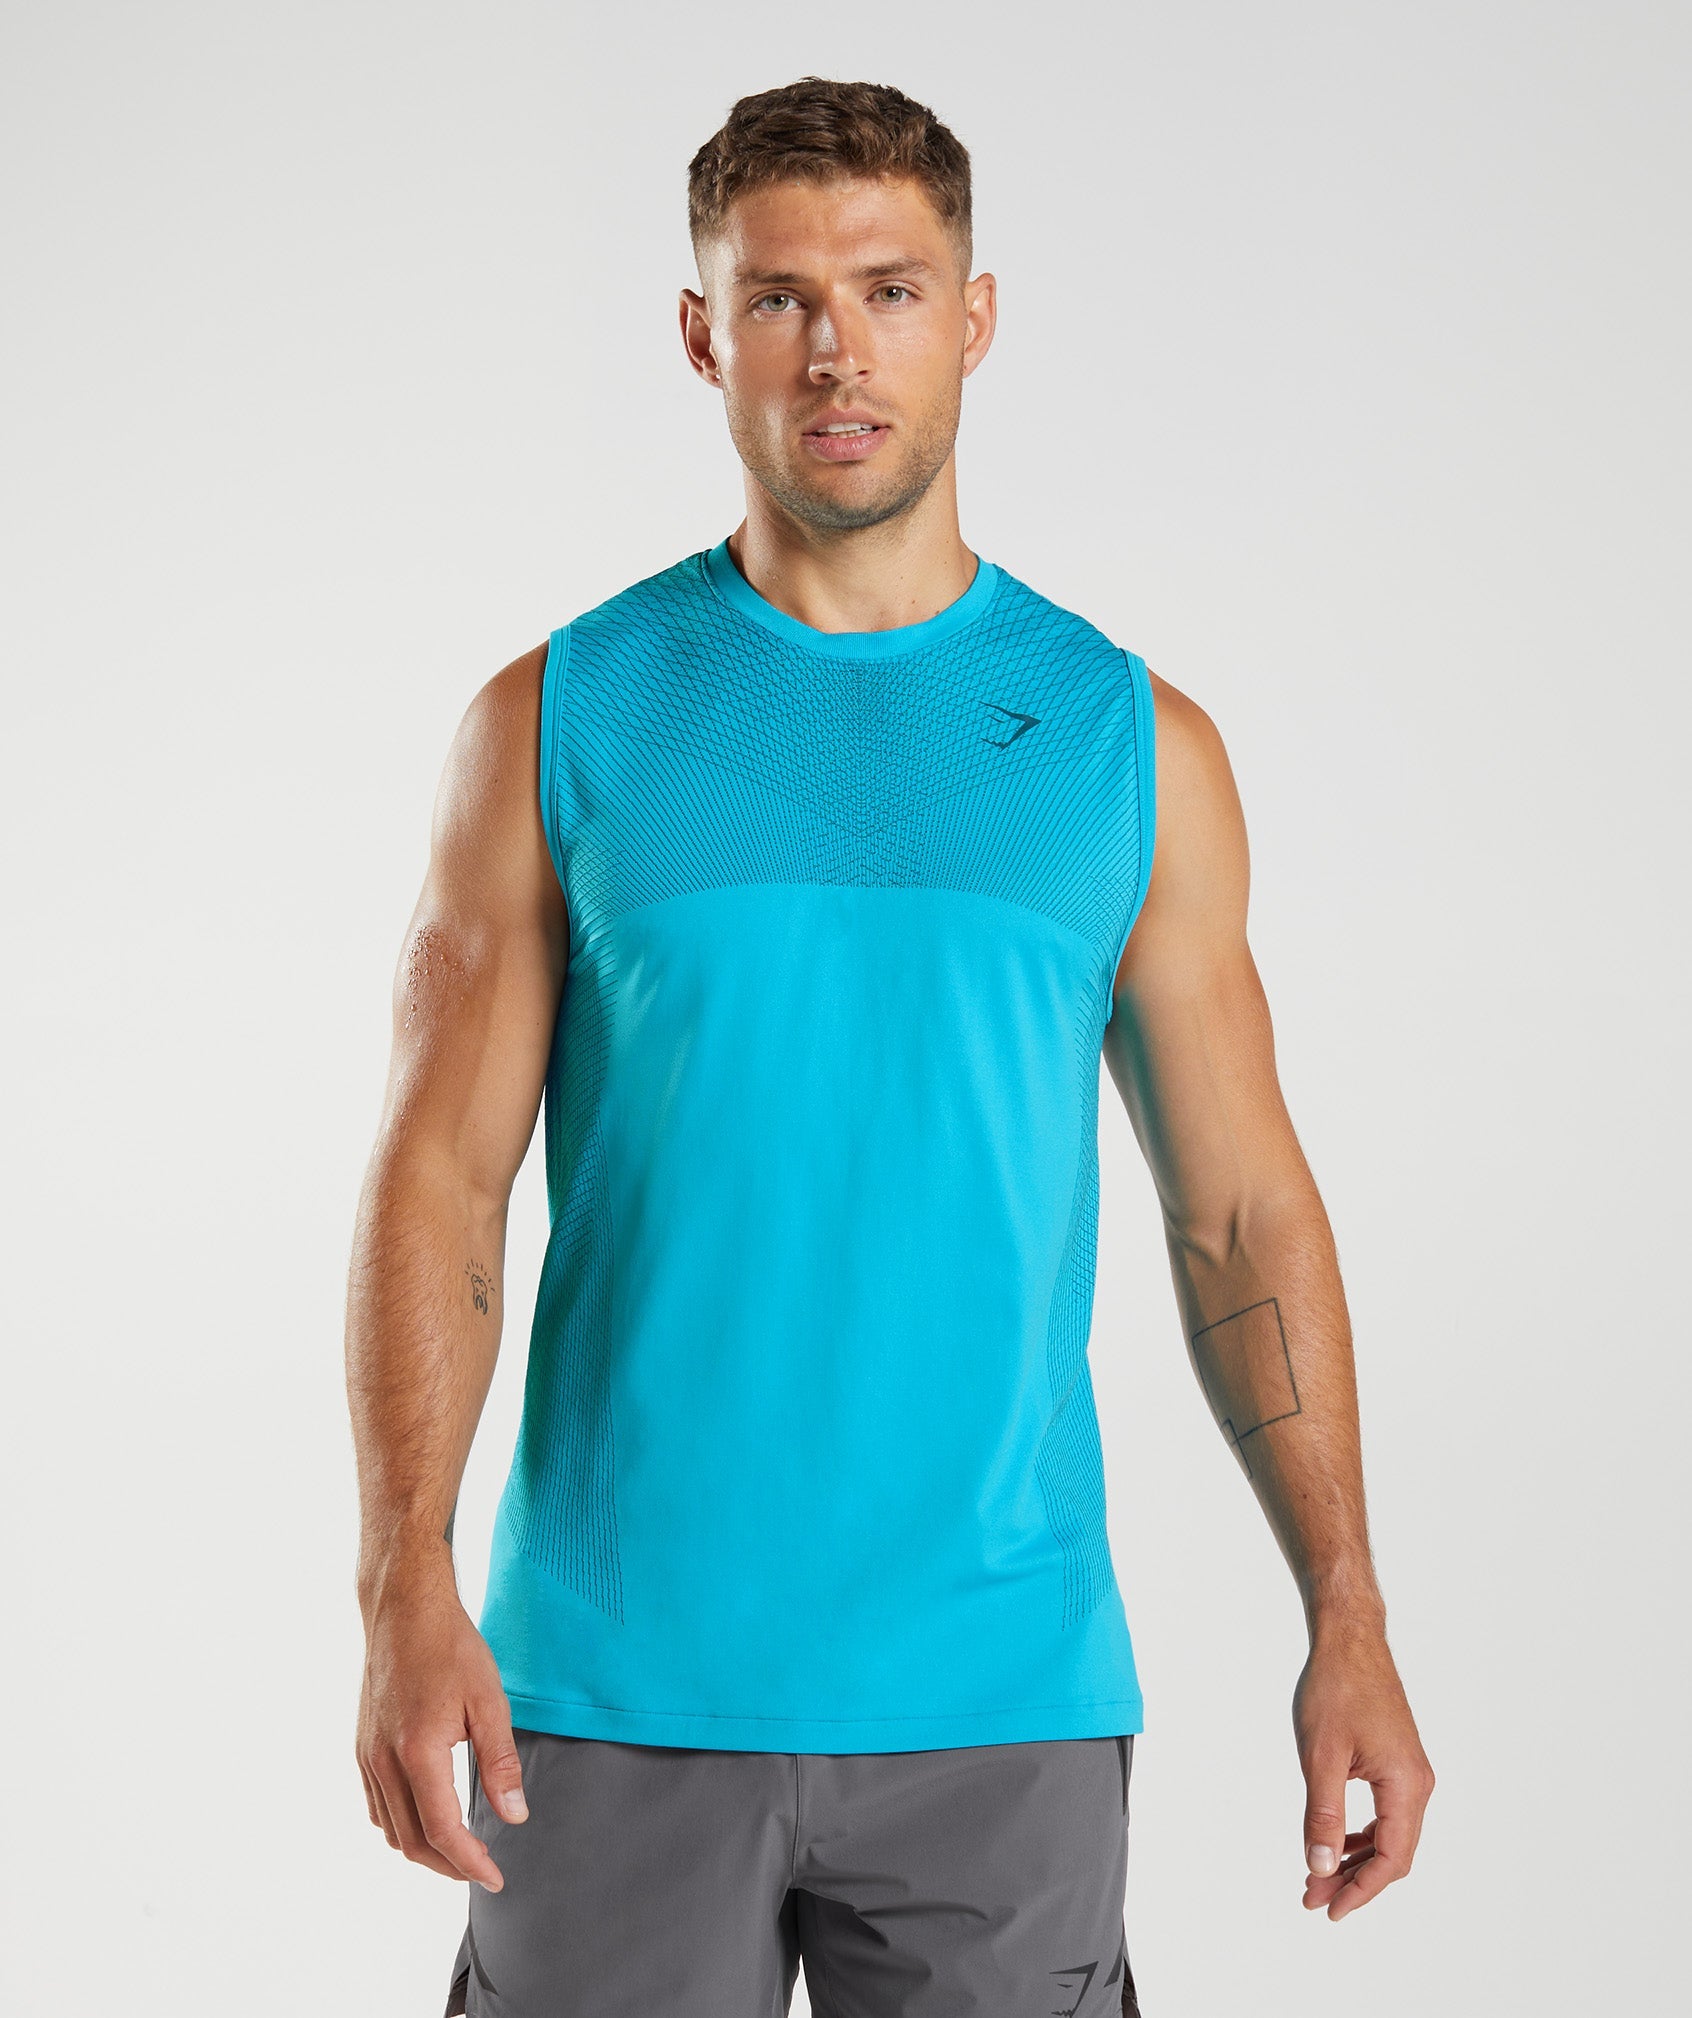 Gymshark Tank Top Shirt Mens Medium White Blue Colorblock Workout Exercise